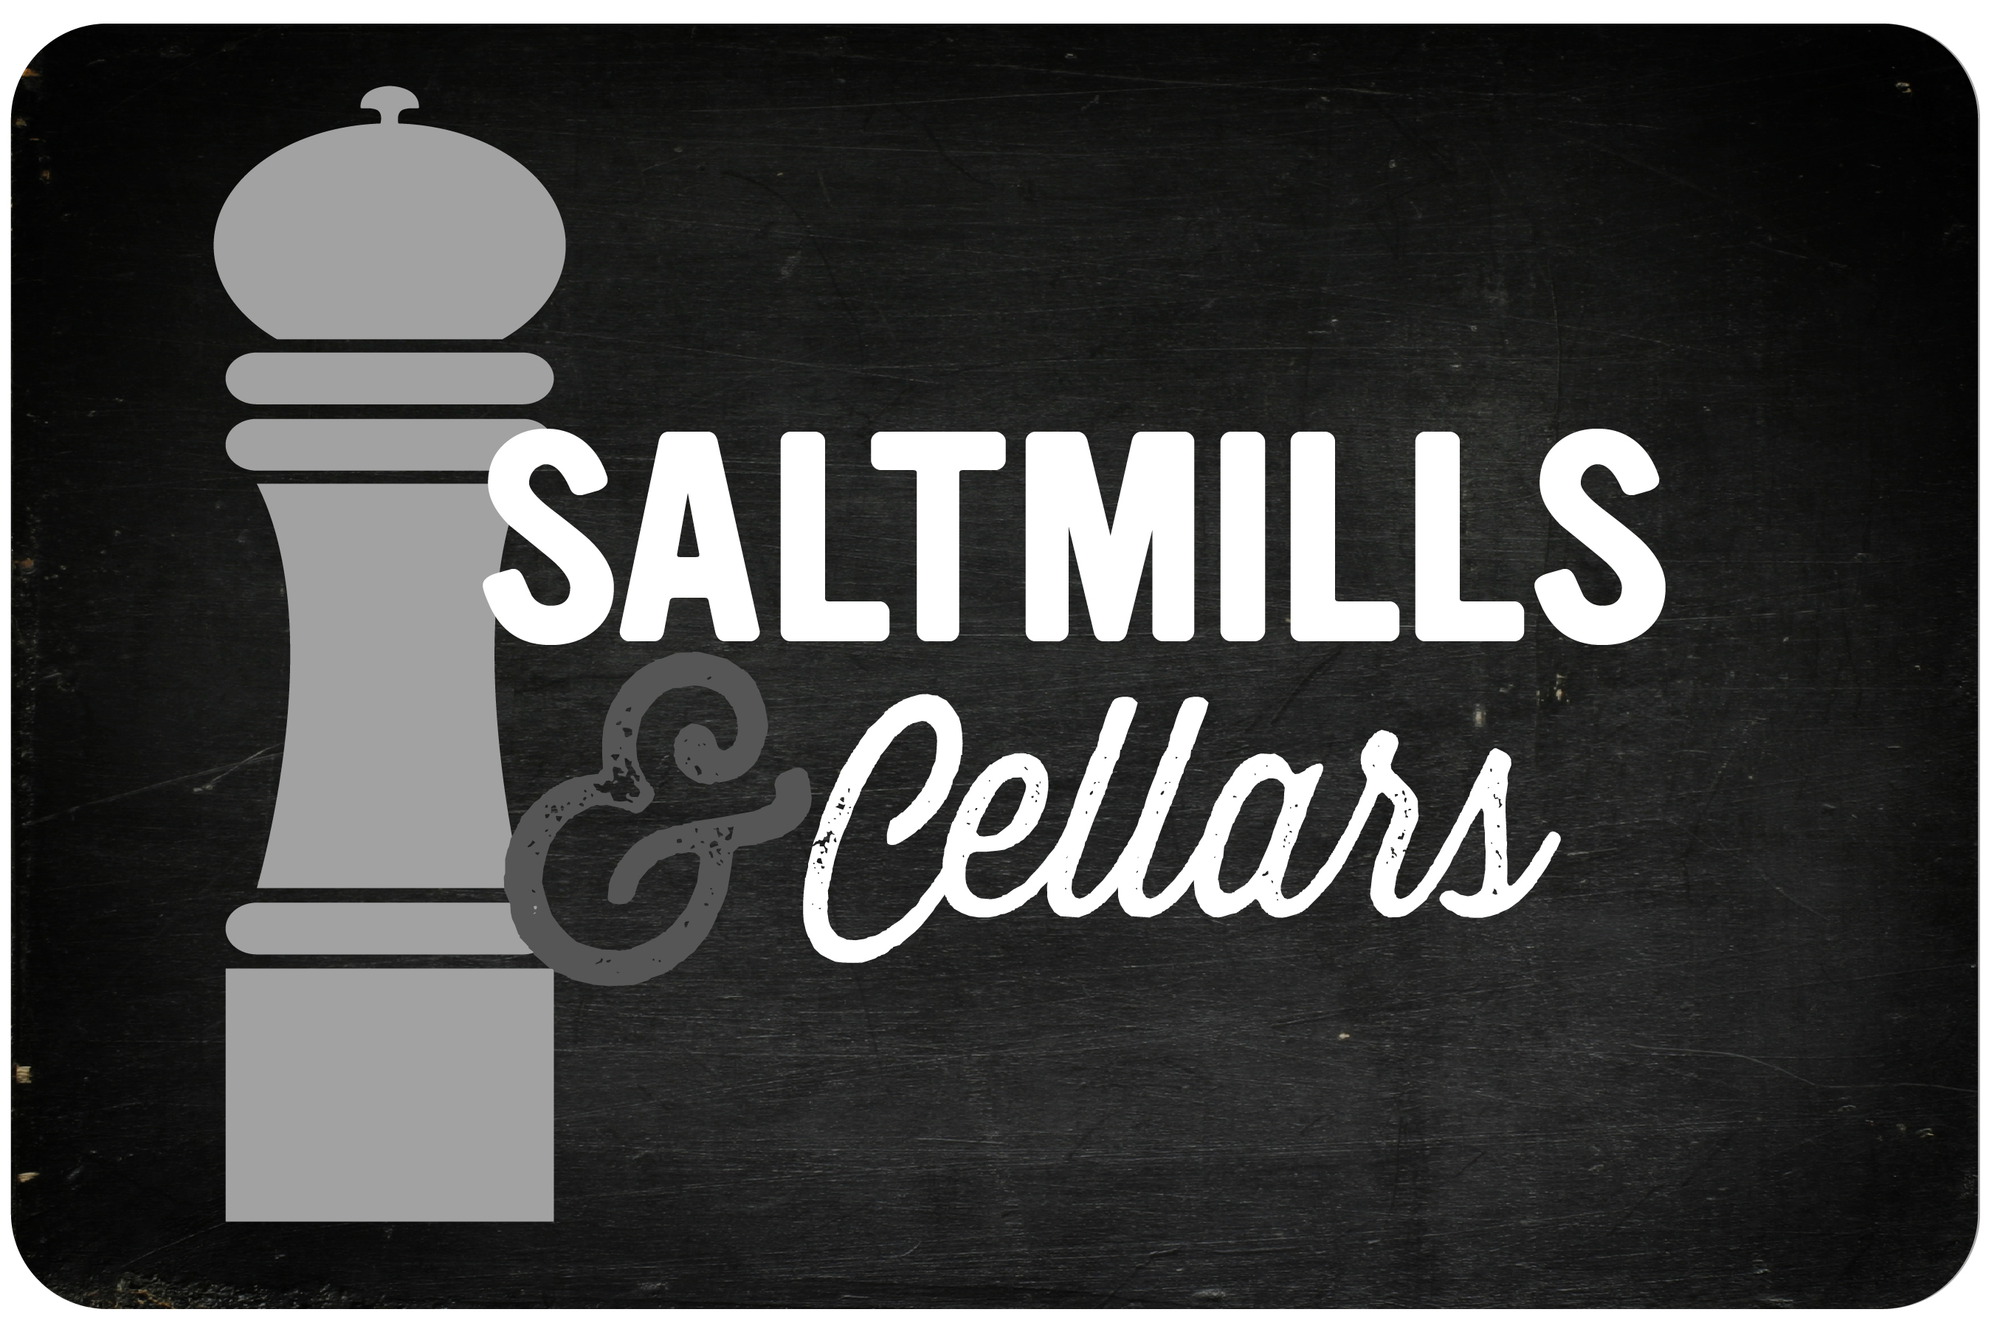 Salt Mills & Cellars